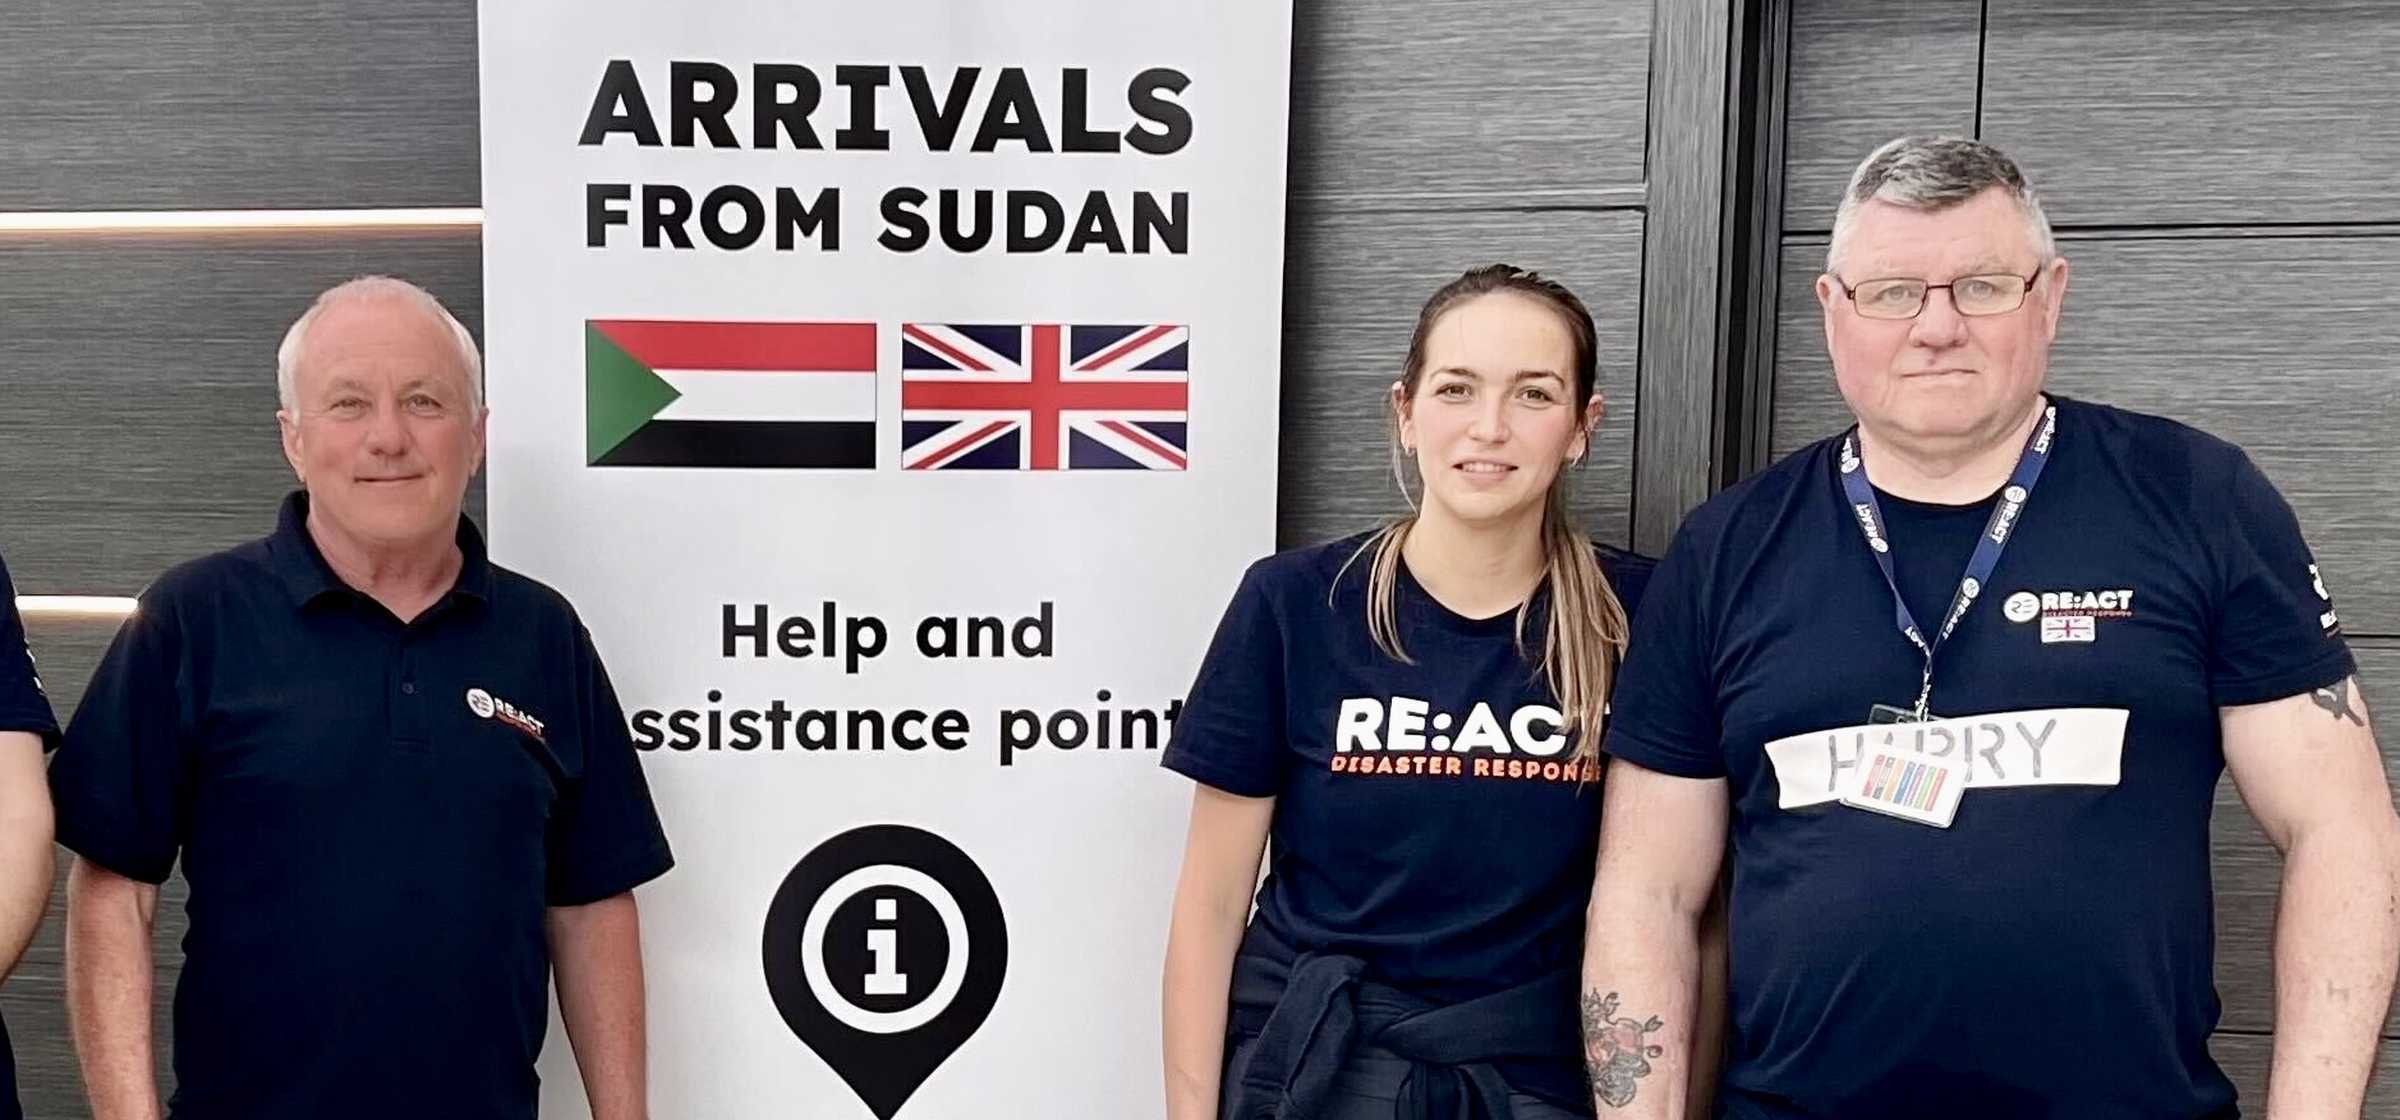 Sudan Arrivals.jpg